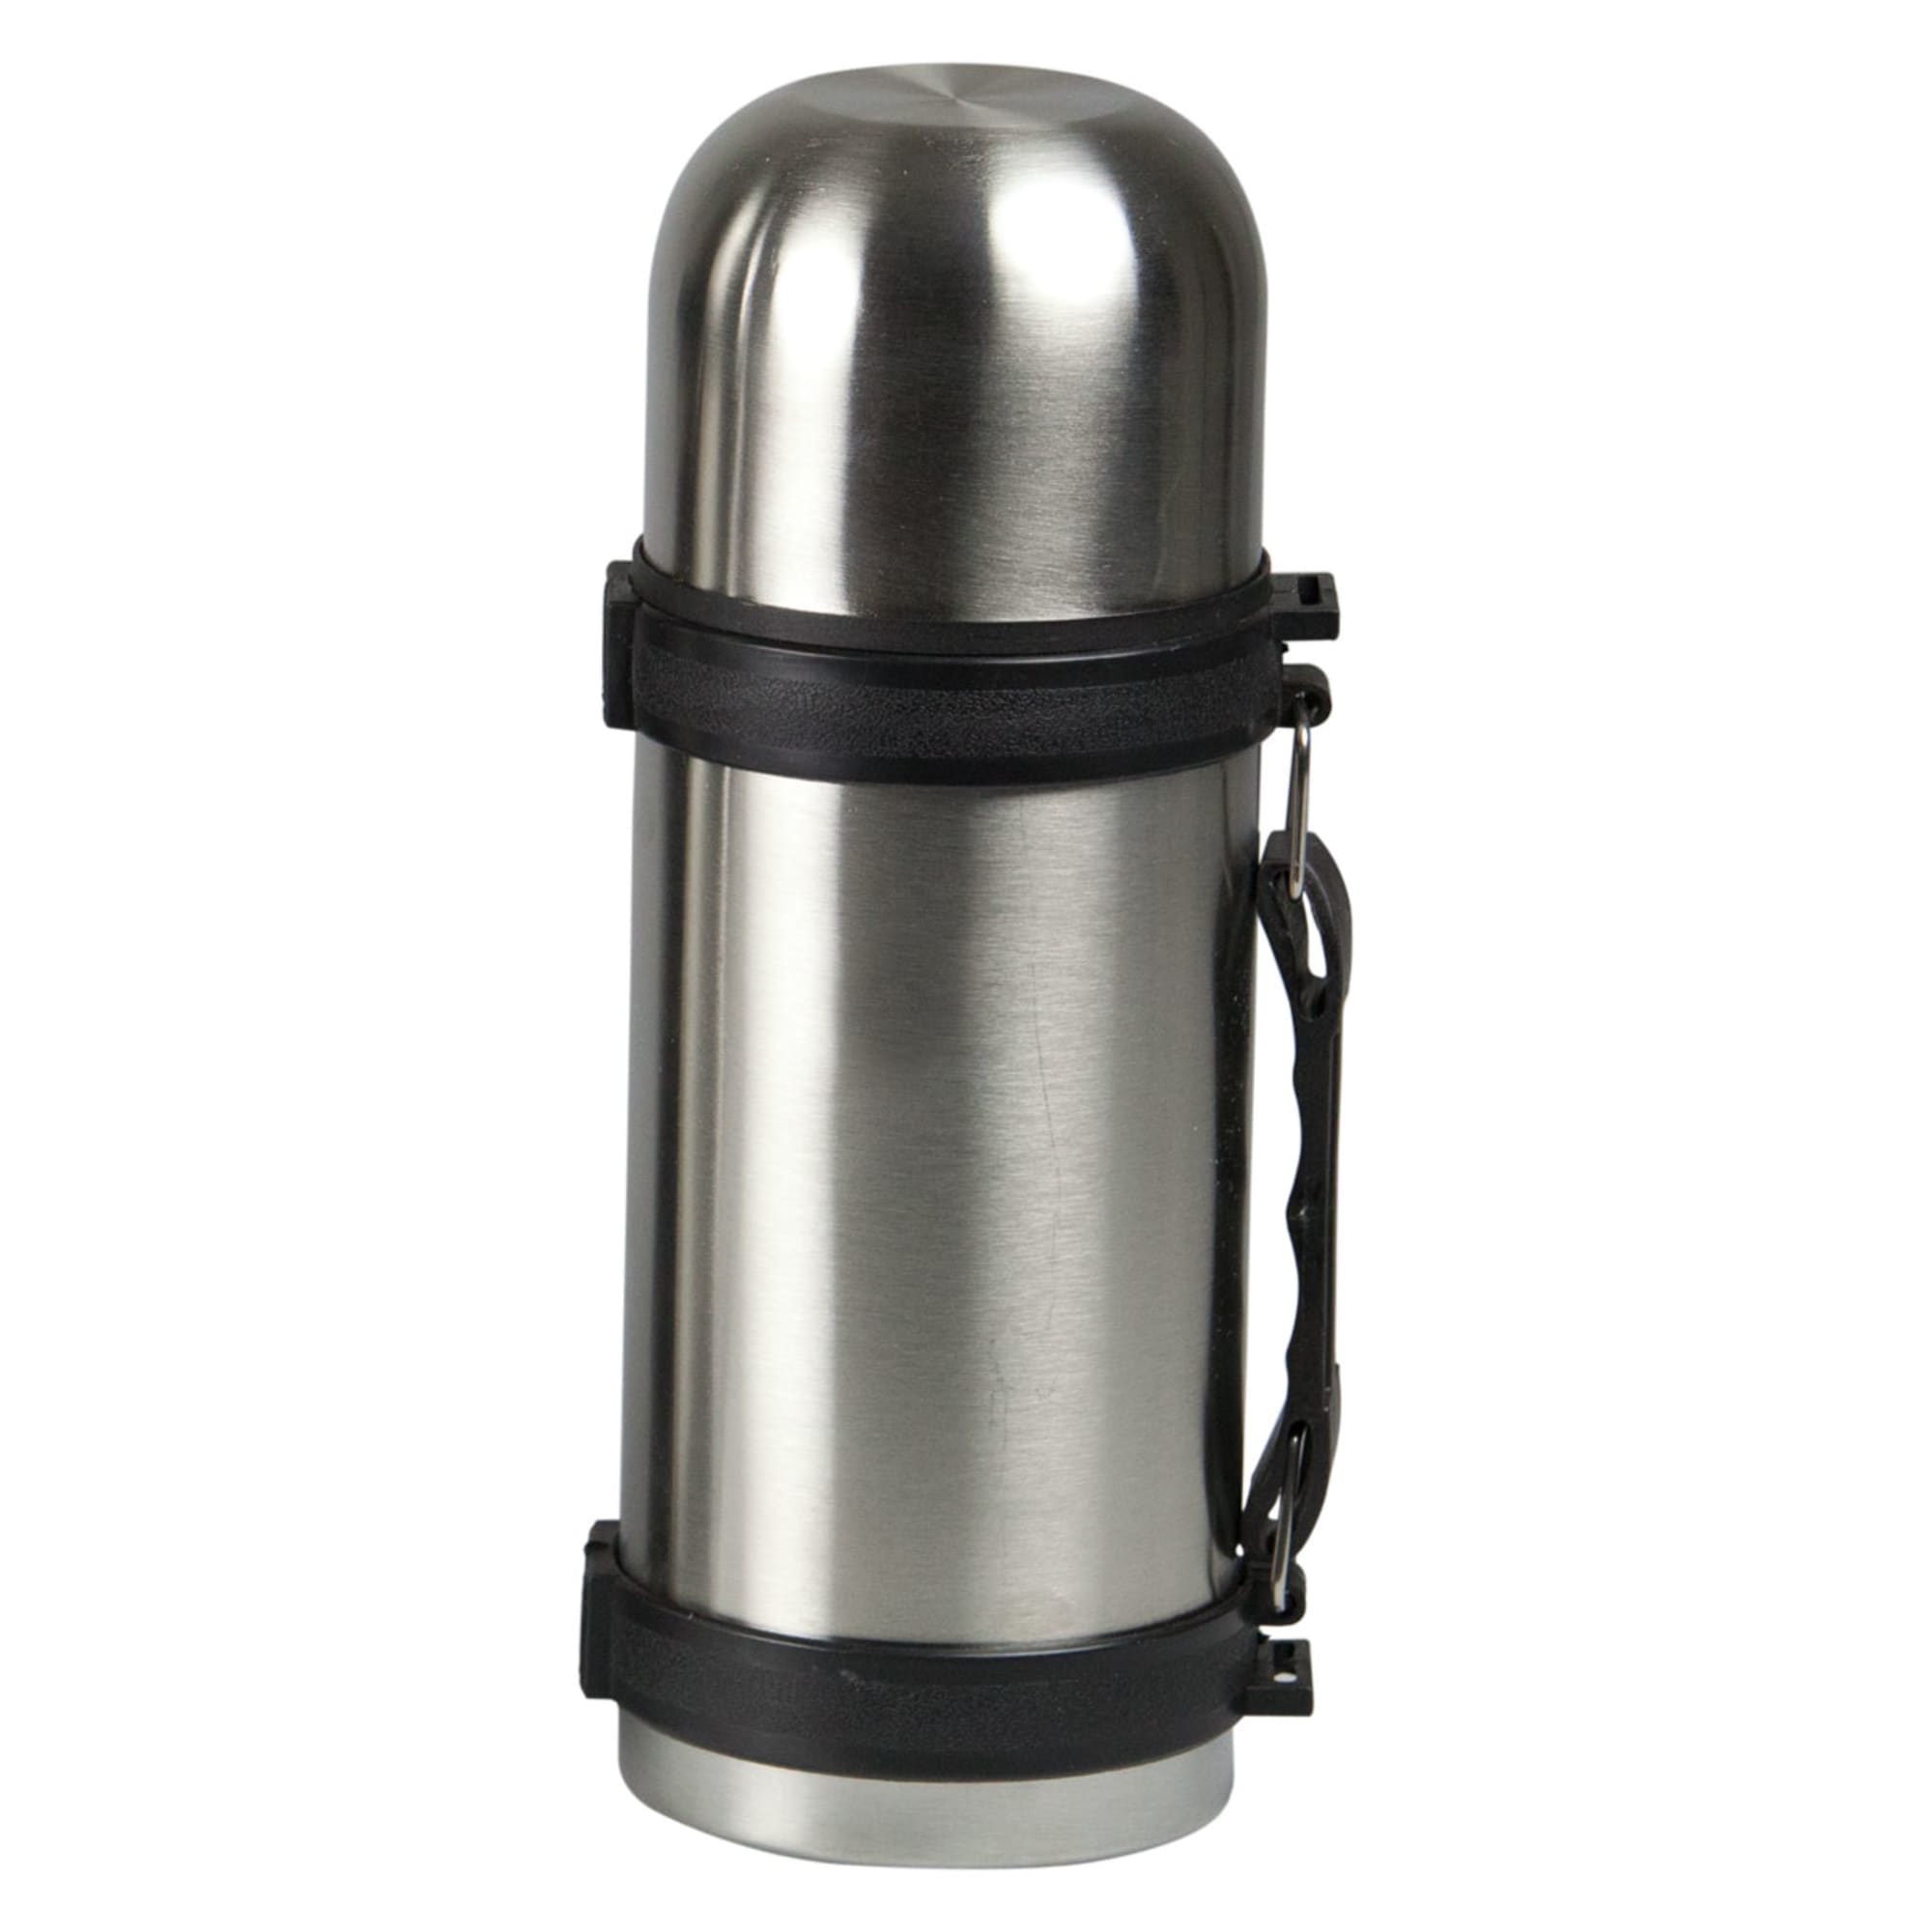 Home Basics Stainless Steel Bullet Vacuum Flask $8.00 EACH, CASE PACK OF 12